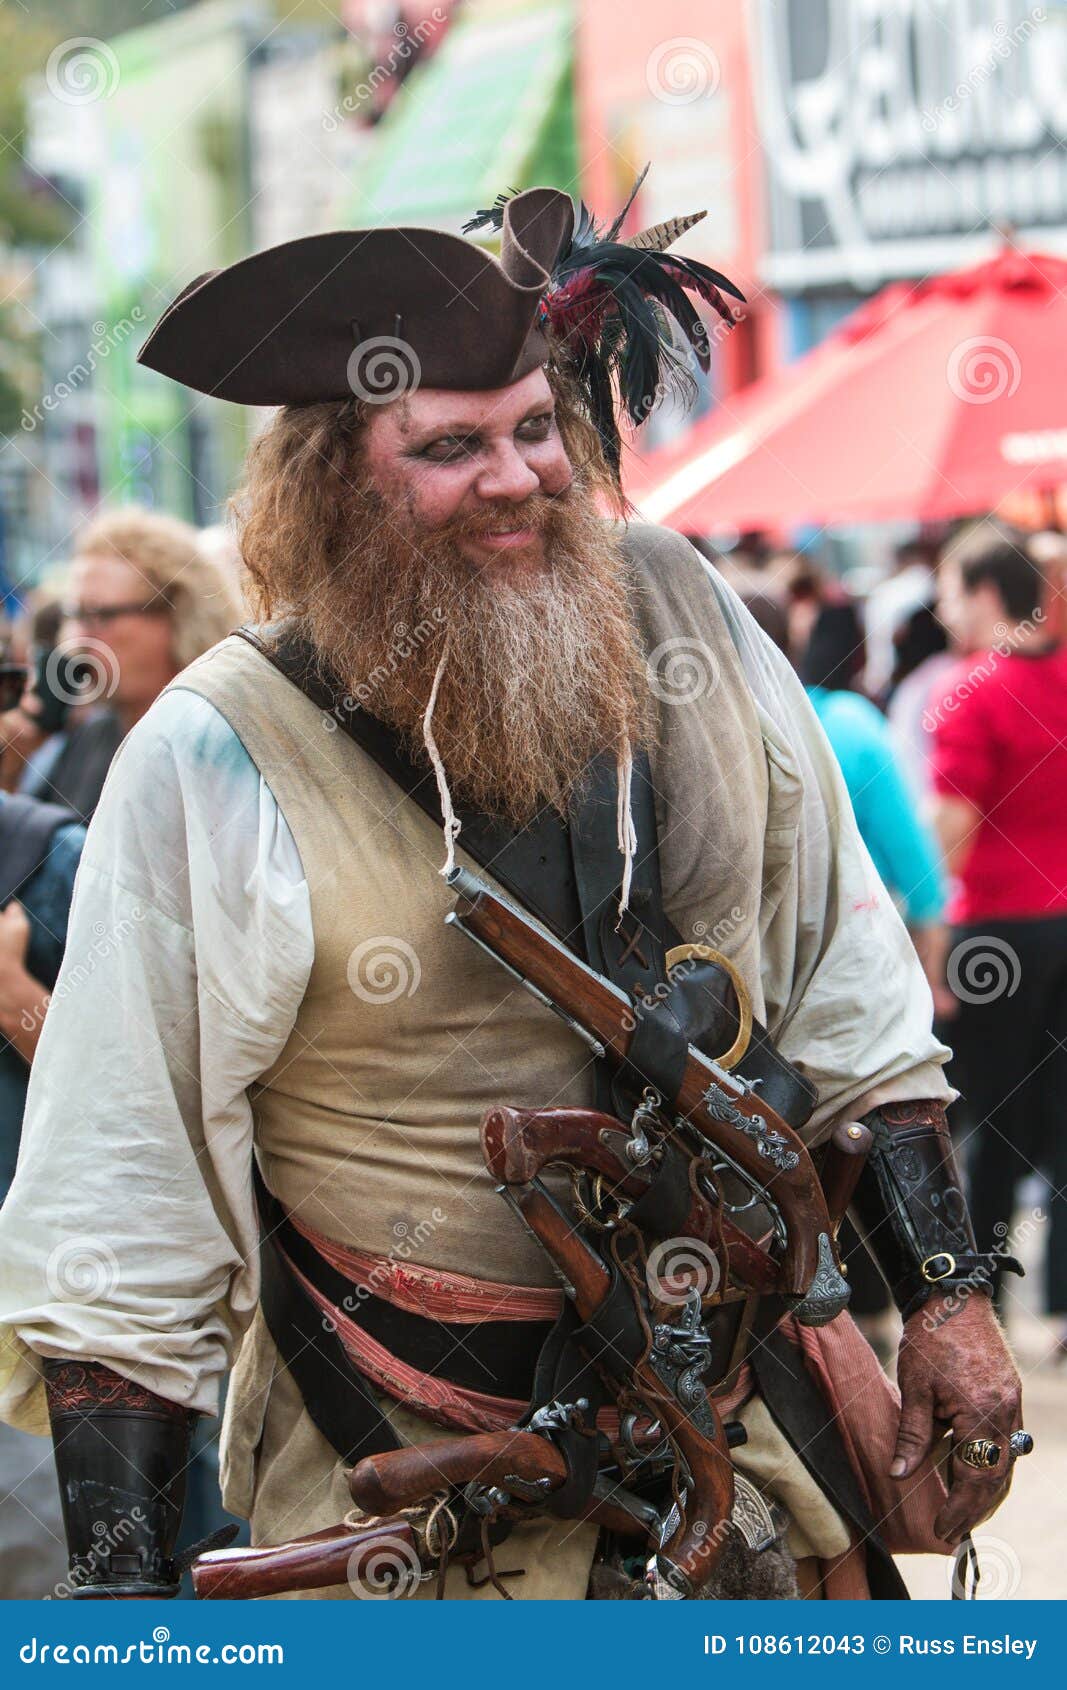 Fantasia adulto masculino traje pirata Carnaval halloween